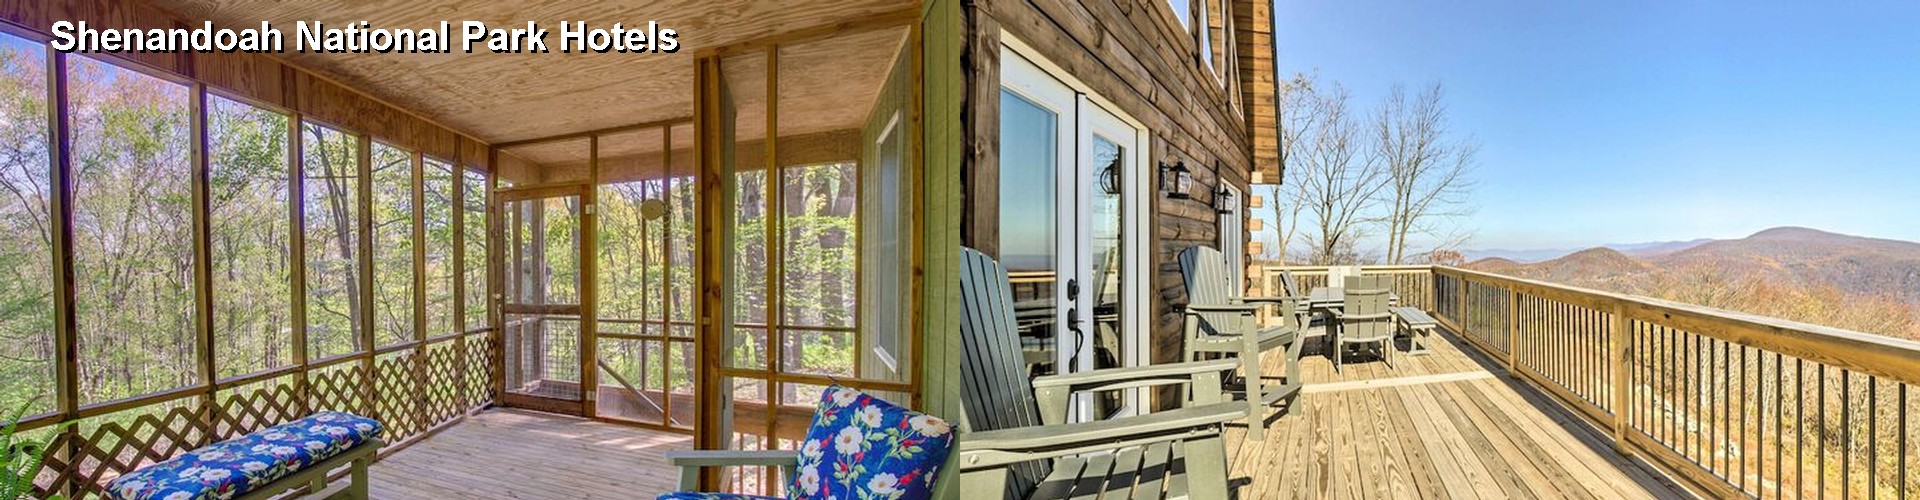 5 Best Hotels near Shenandoah National Park